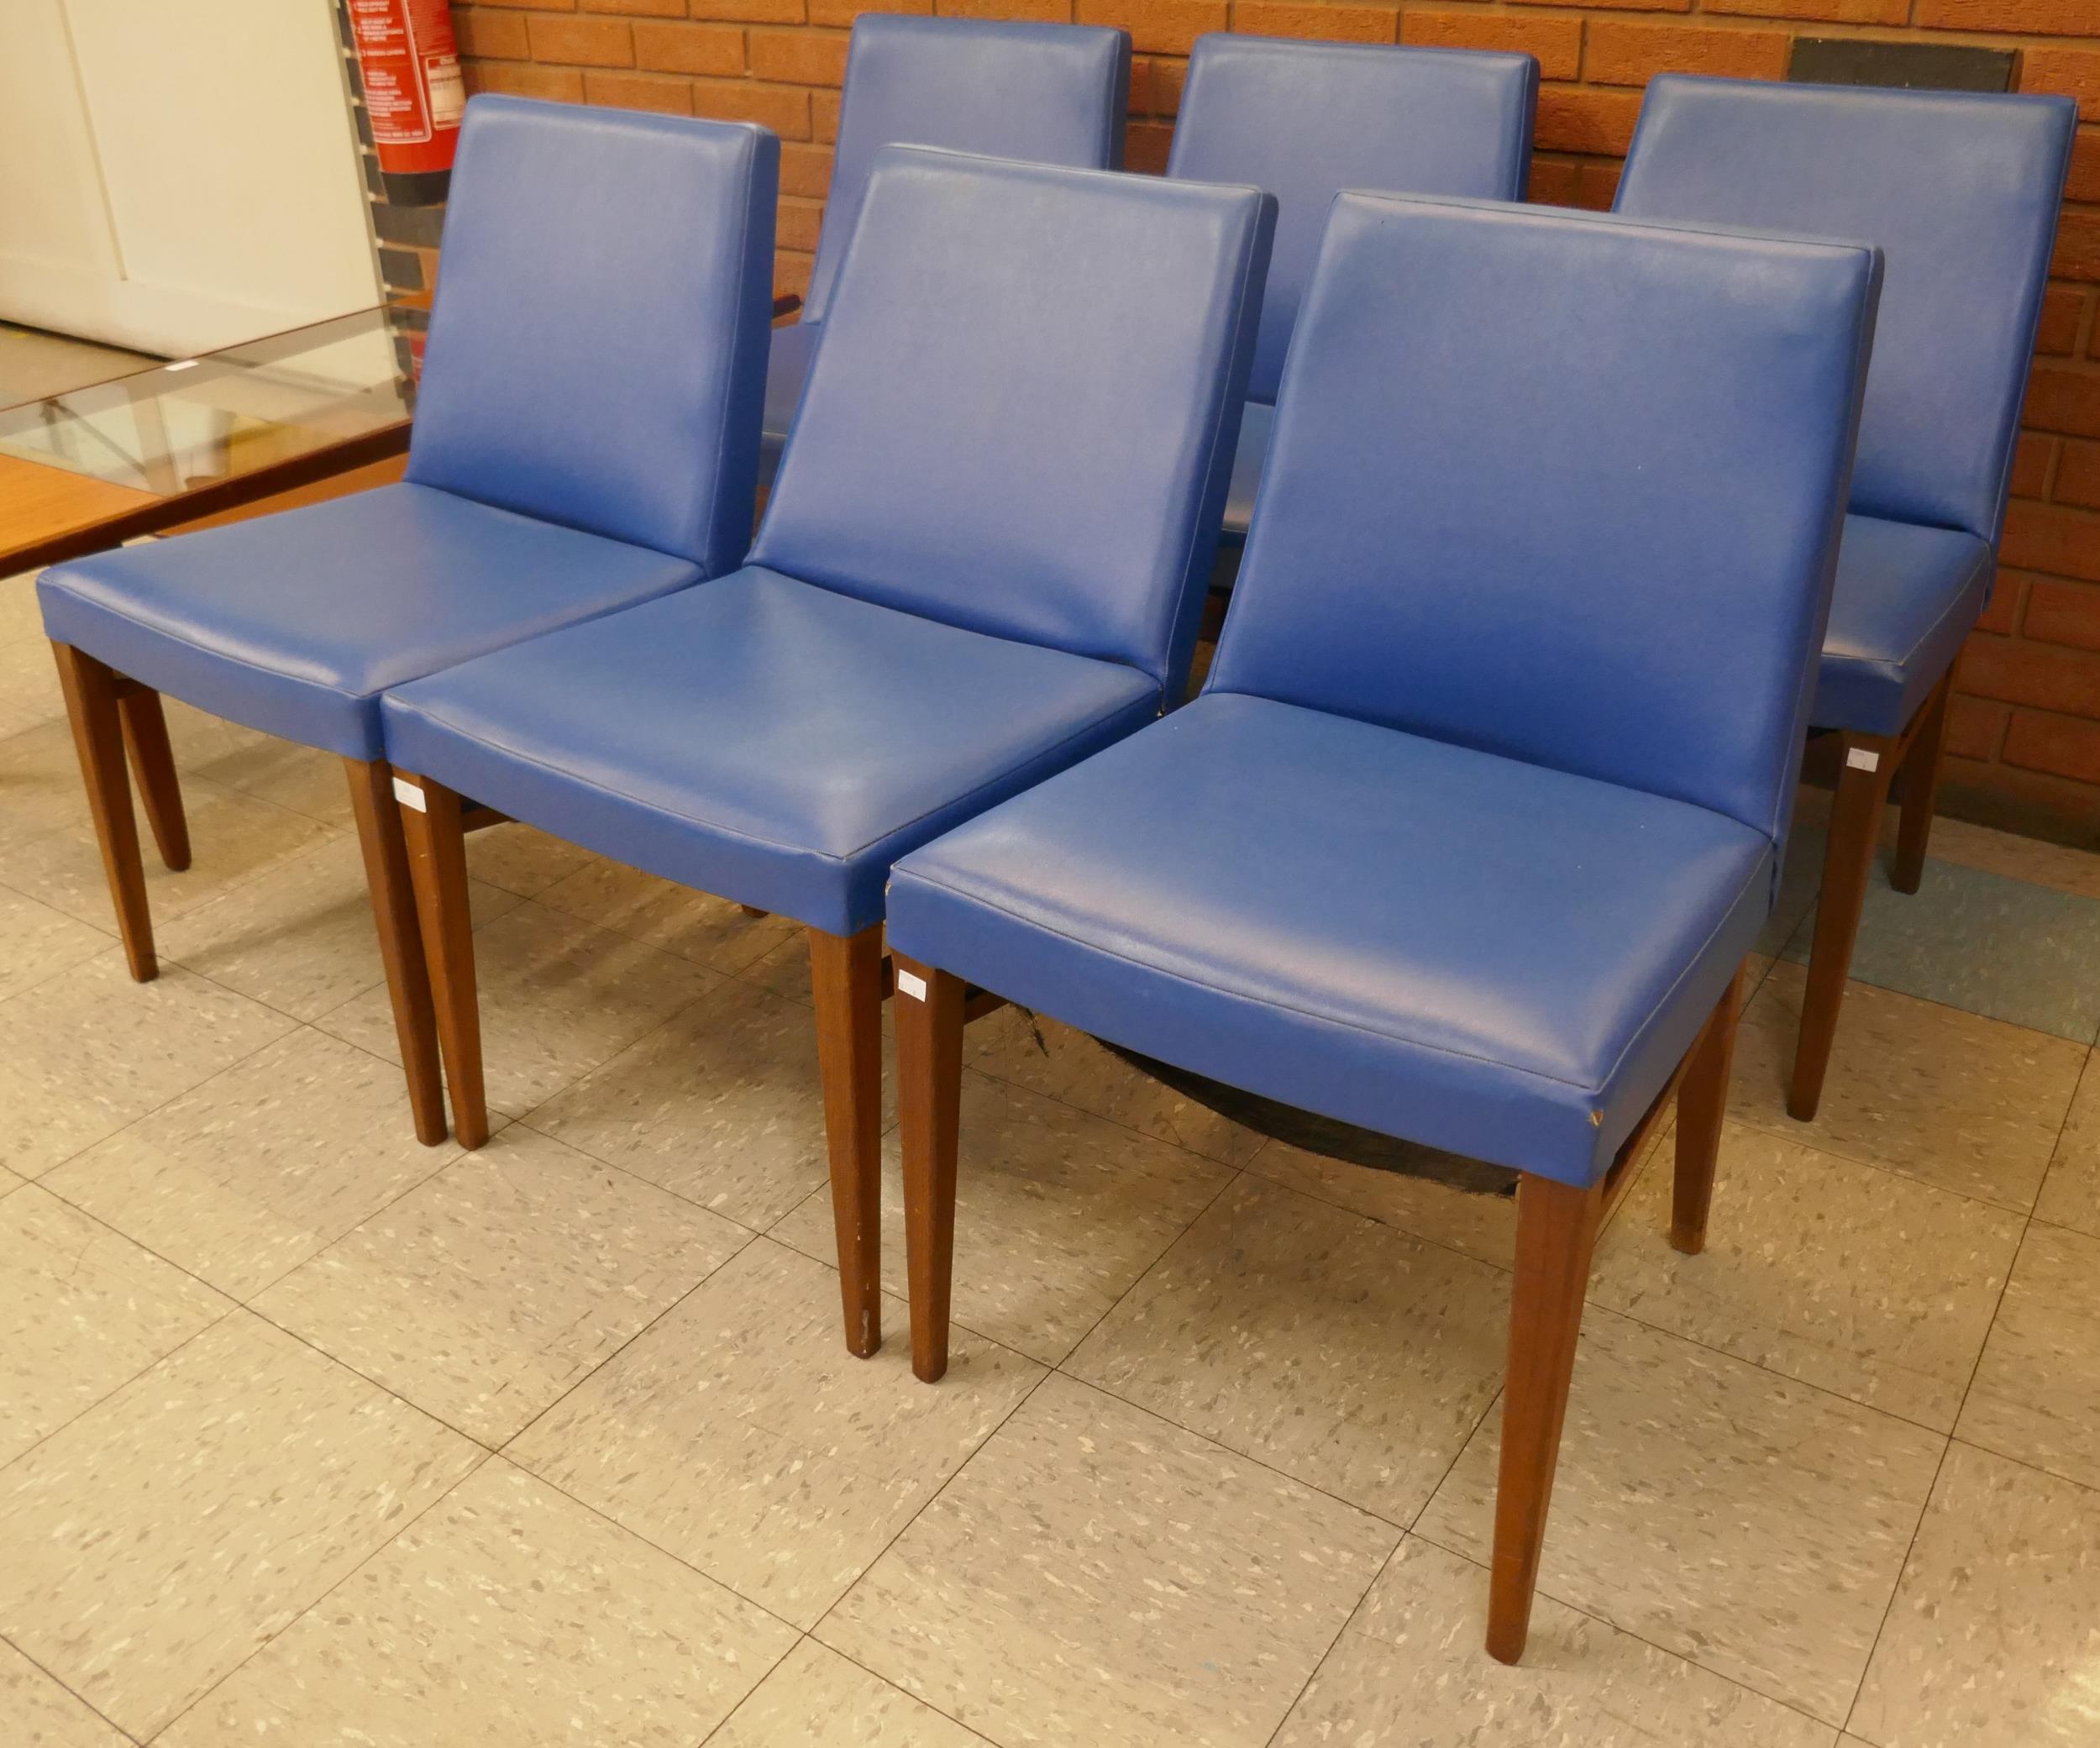 A rare set of six G-Plan Danish Design teak and blue vinyl dining chairs, designed by Ib Kofod